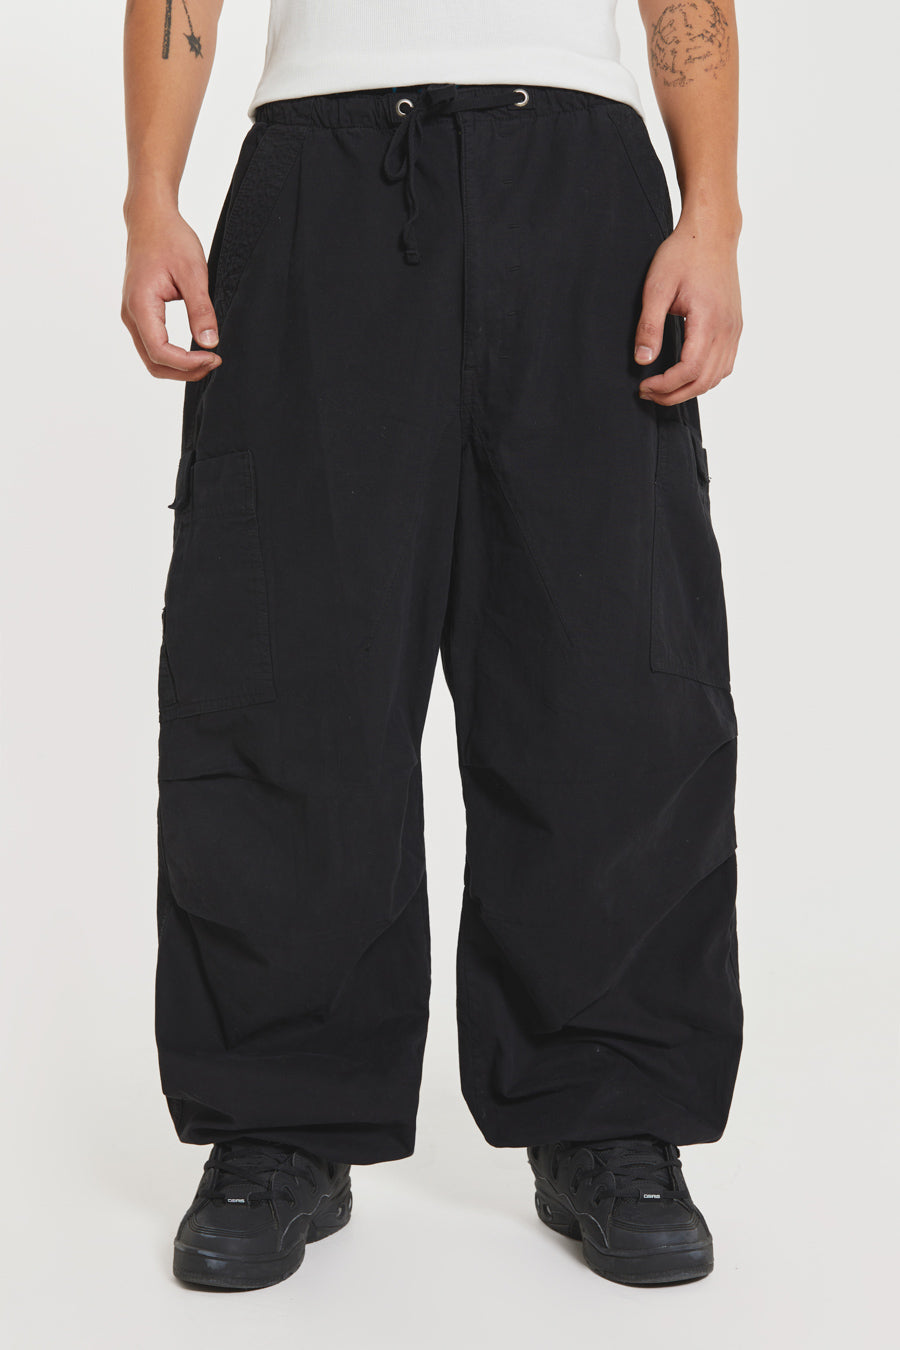 Parachute Pants for Men 9 10 Men Fashion Sports Casual Pants Elastic Waist  Straight Leg Loose Pants 